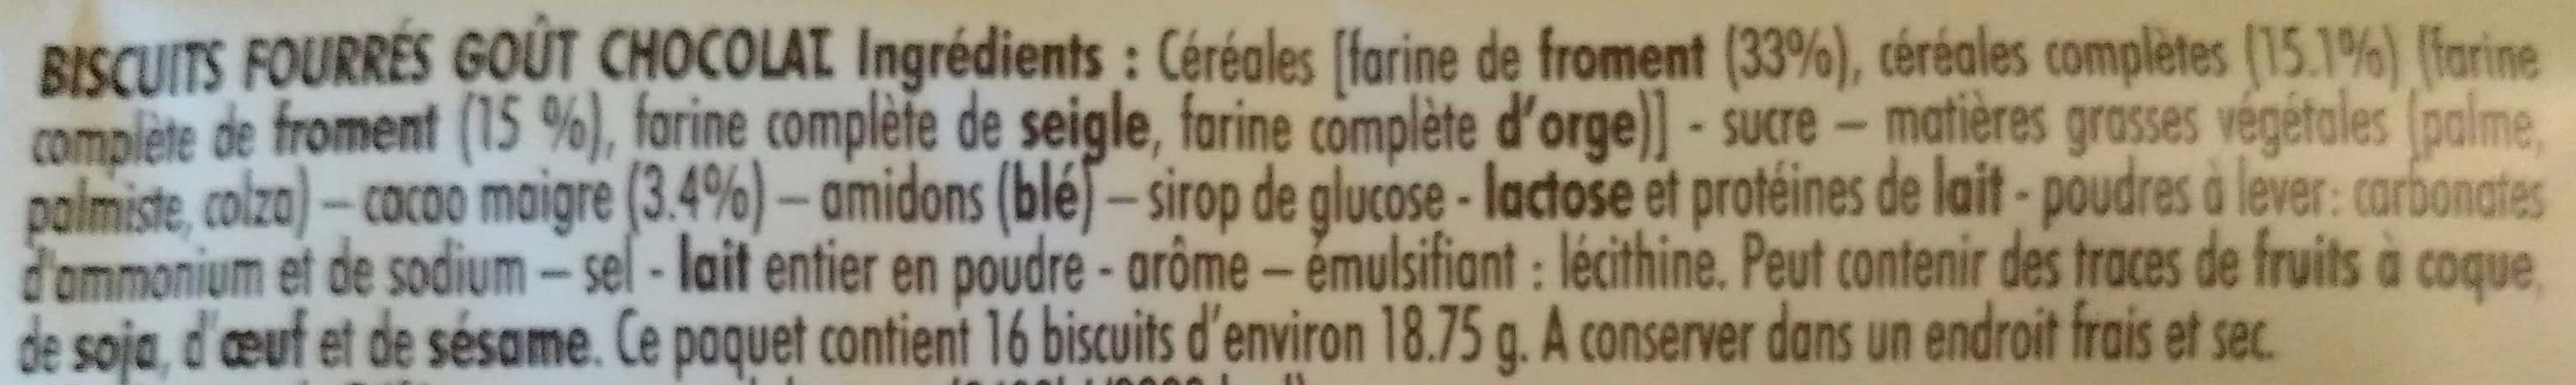 Biscuits Goût Chocolat - Ingrediënten - fr